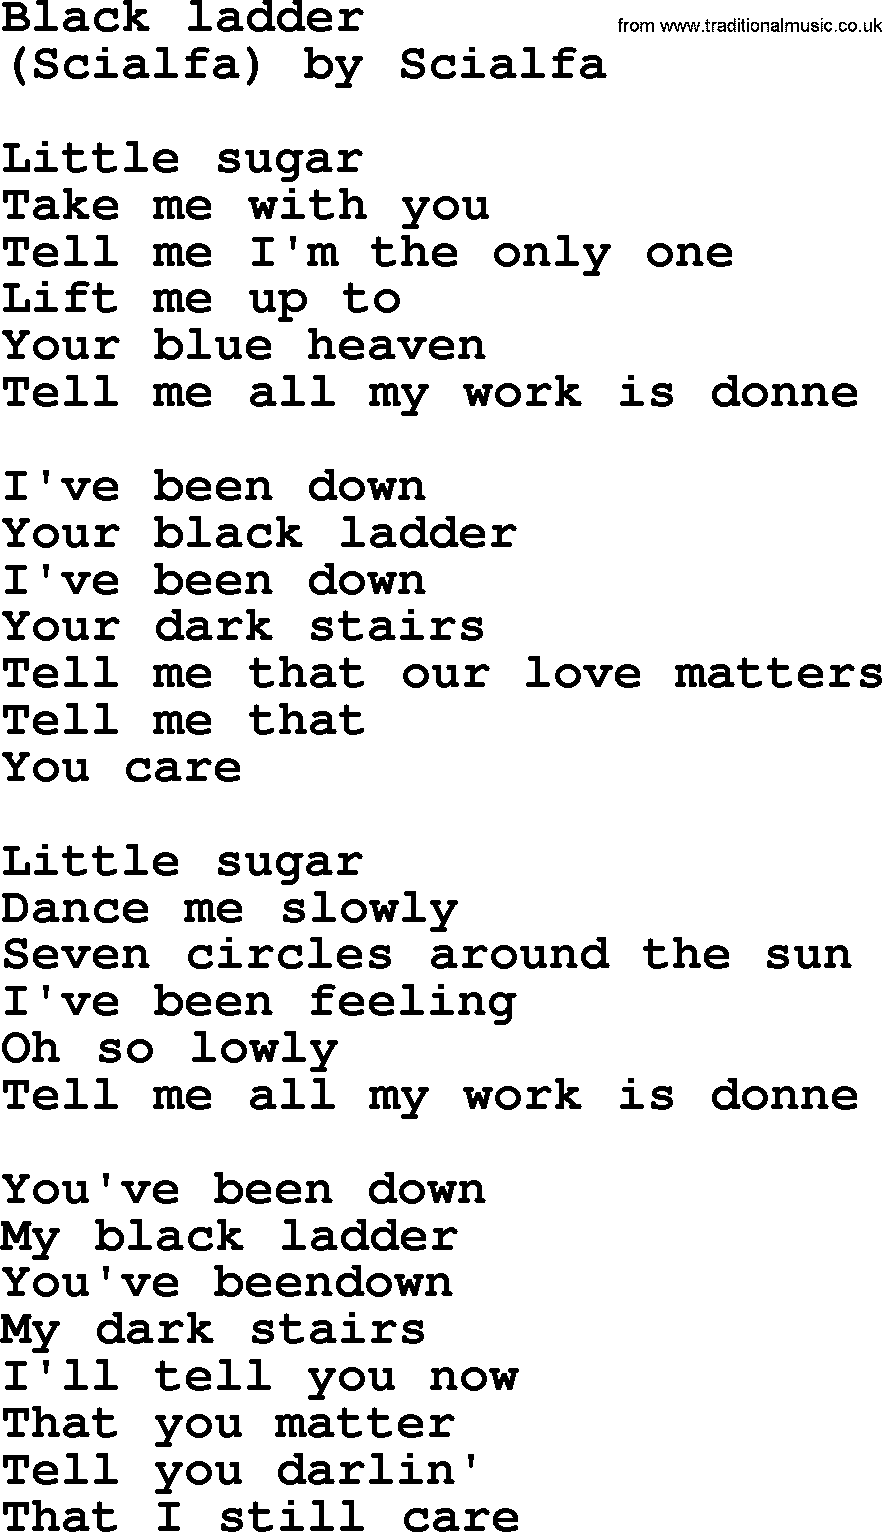 Bruce Springsteen song: Black Ladder lyrics